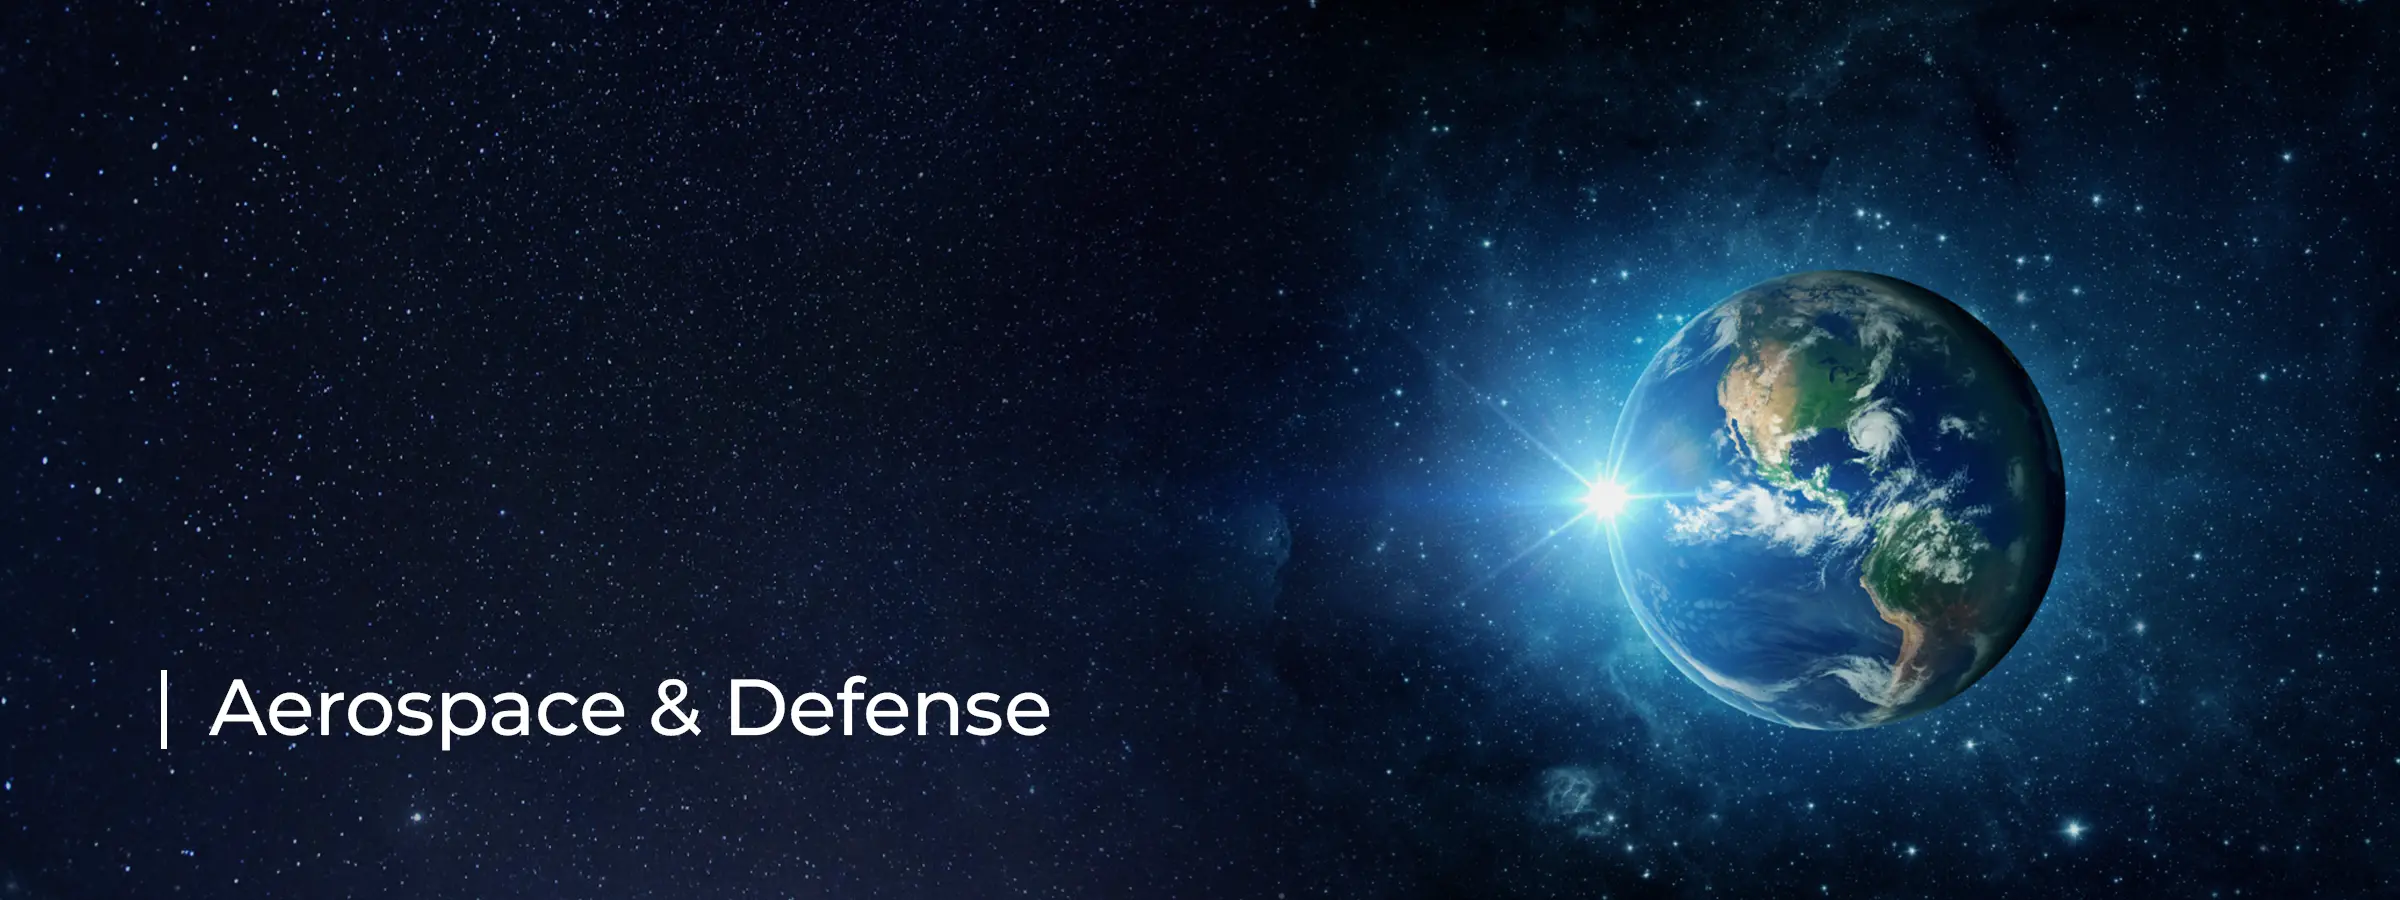 aerospace-defense-service-banner